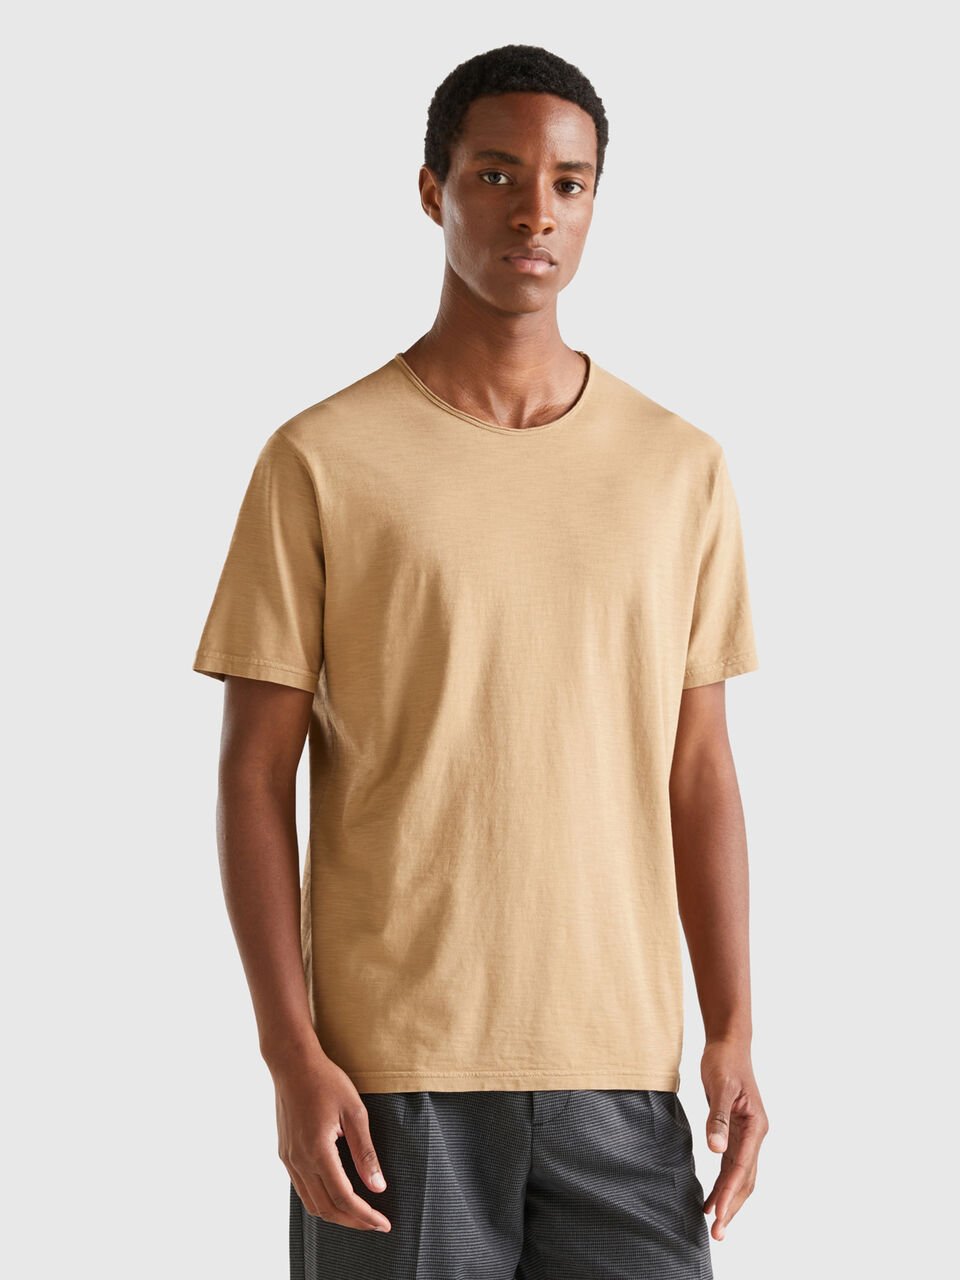 Camel t-shirt in slub cotton - Camel